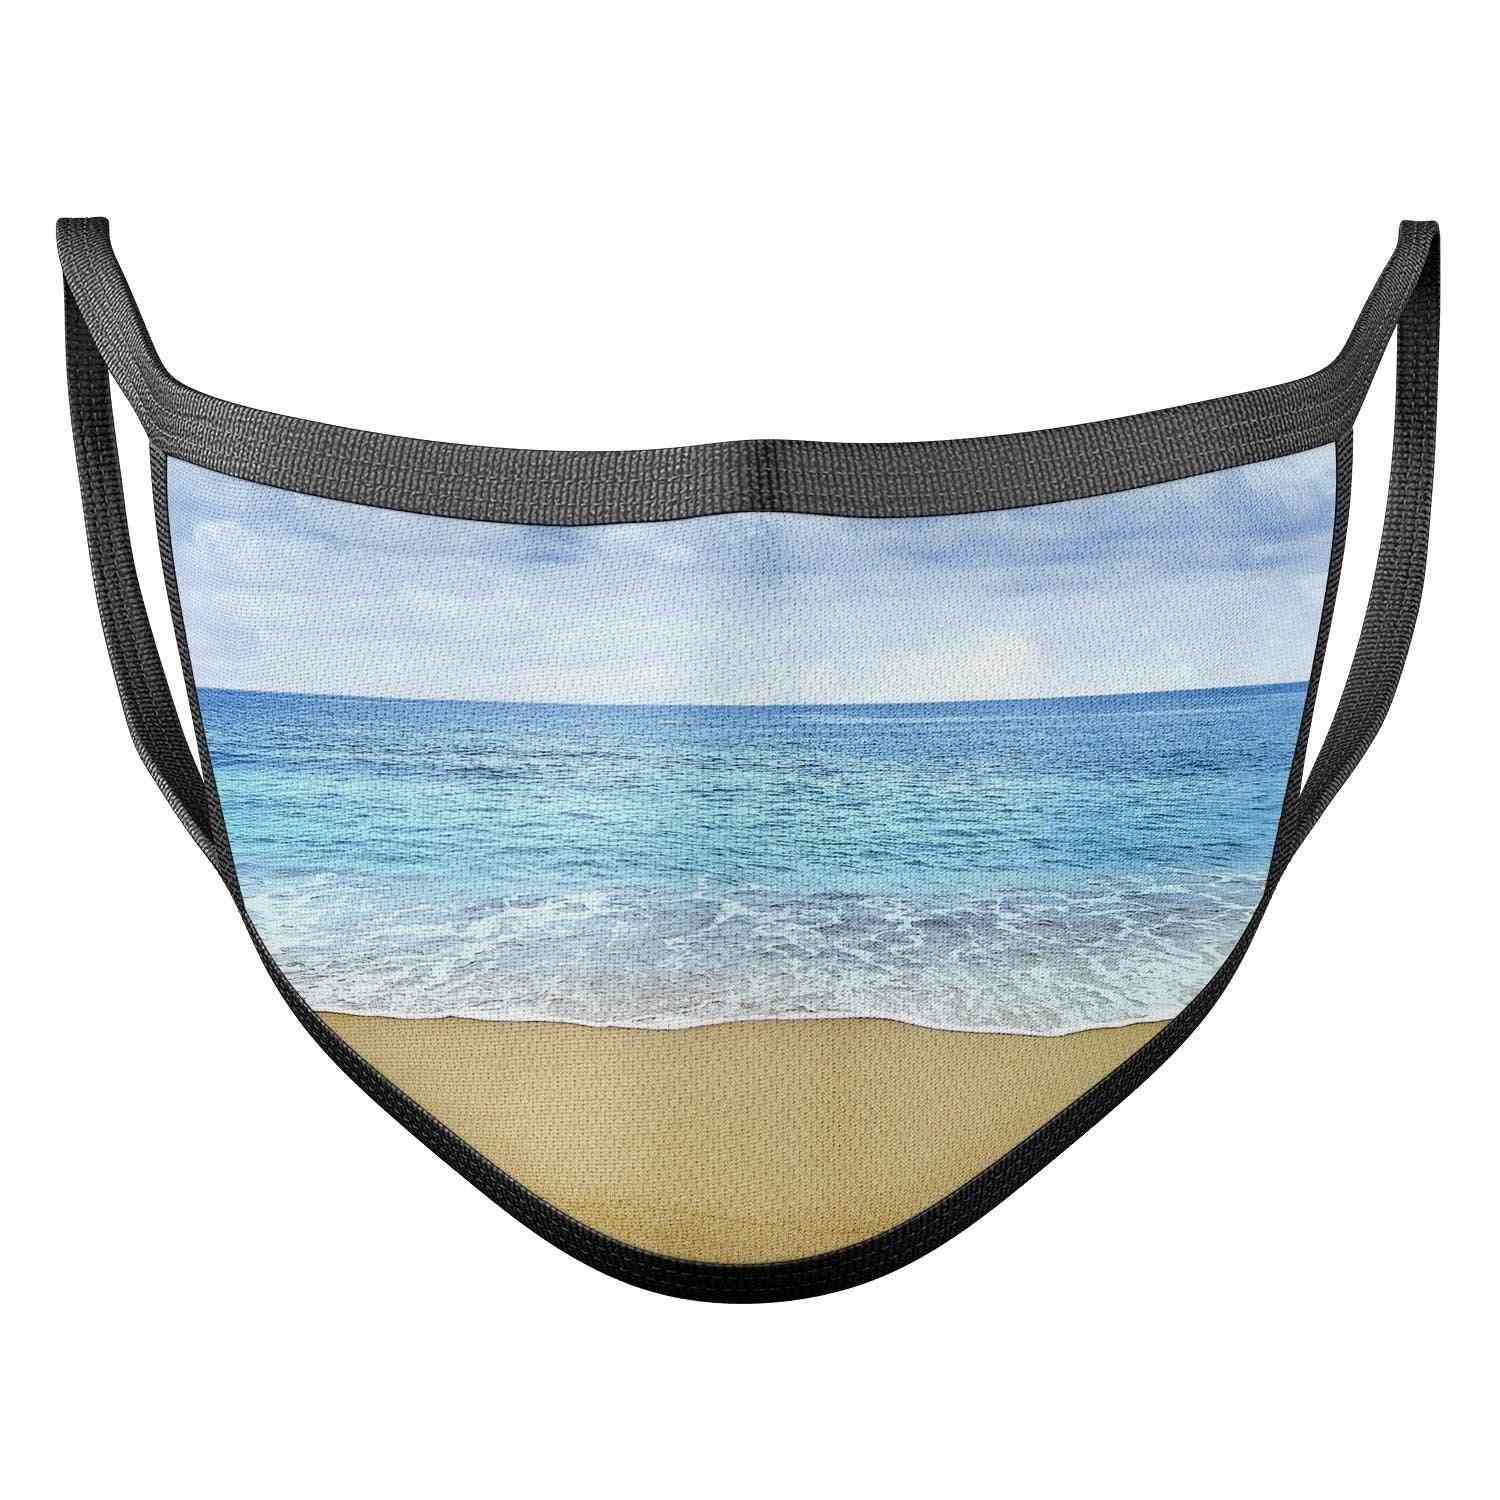 Calm Blue Sky And Sea Shore - Unisex Anti-dust Masks